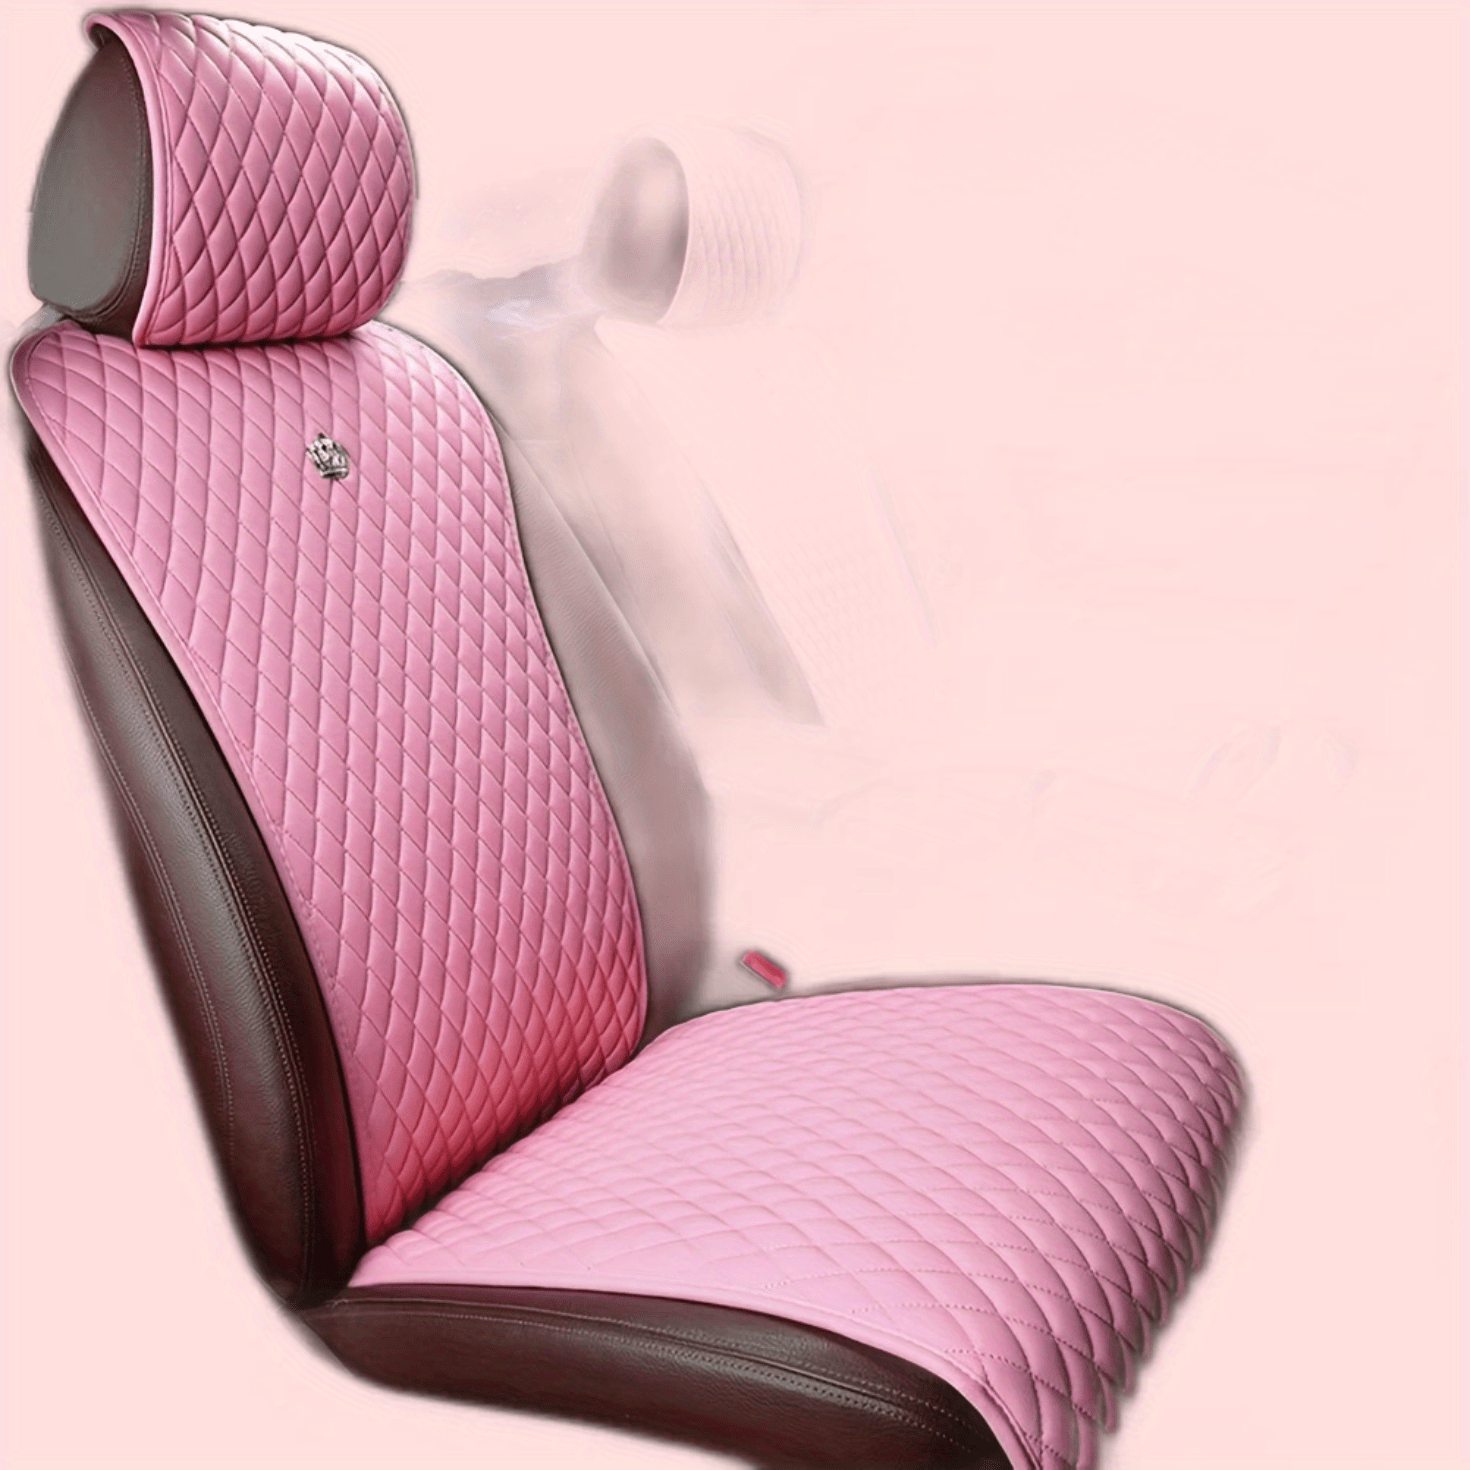 Cute Pink Inlaid Crystal Artificial Diamond Crown Car Seat Cushion For  Women Fashion Four Seasons Universal Cover Car Accessories Women